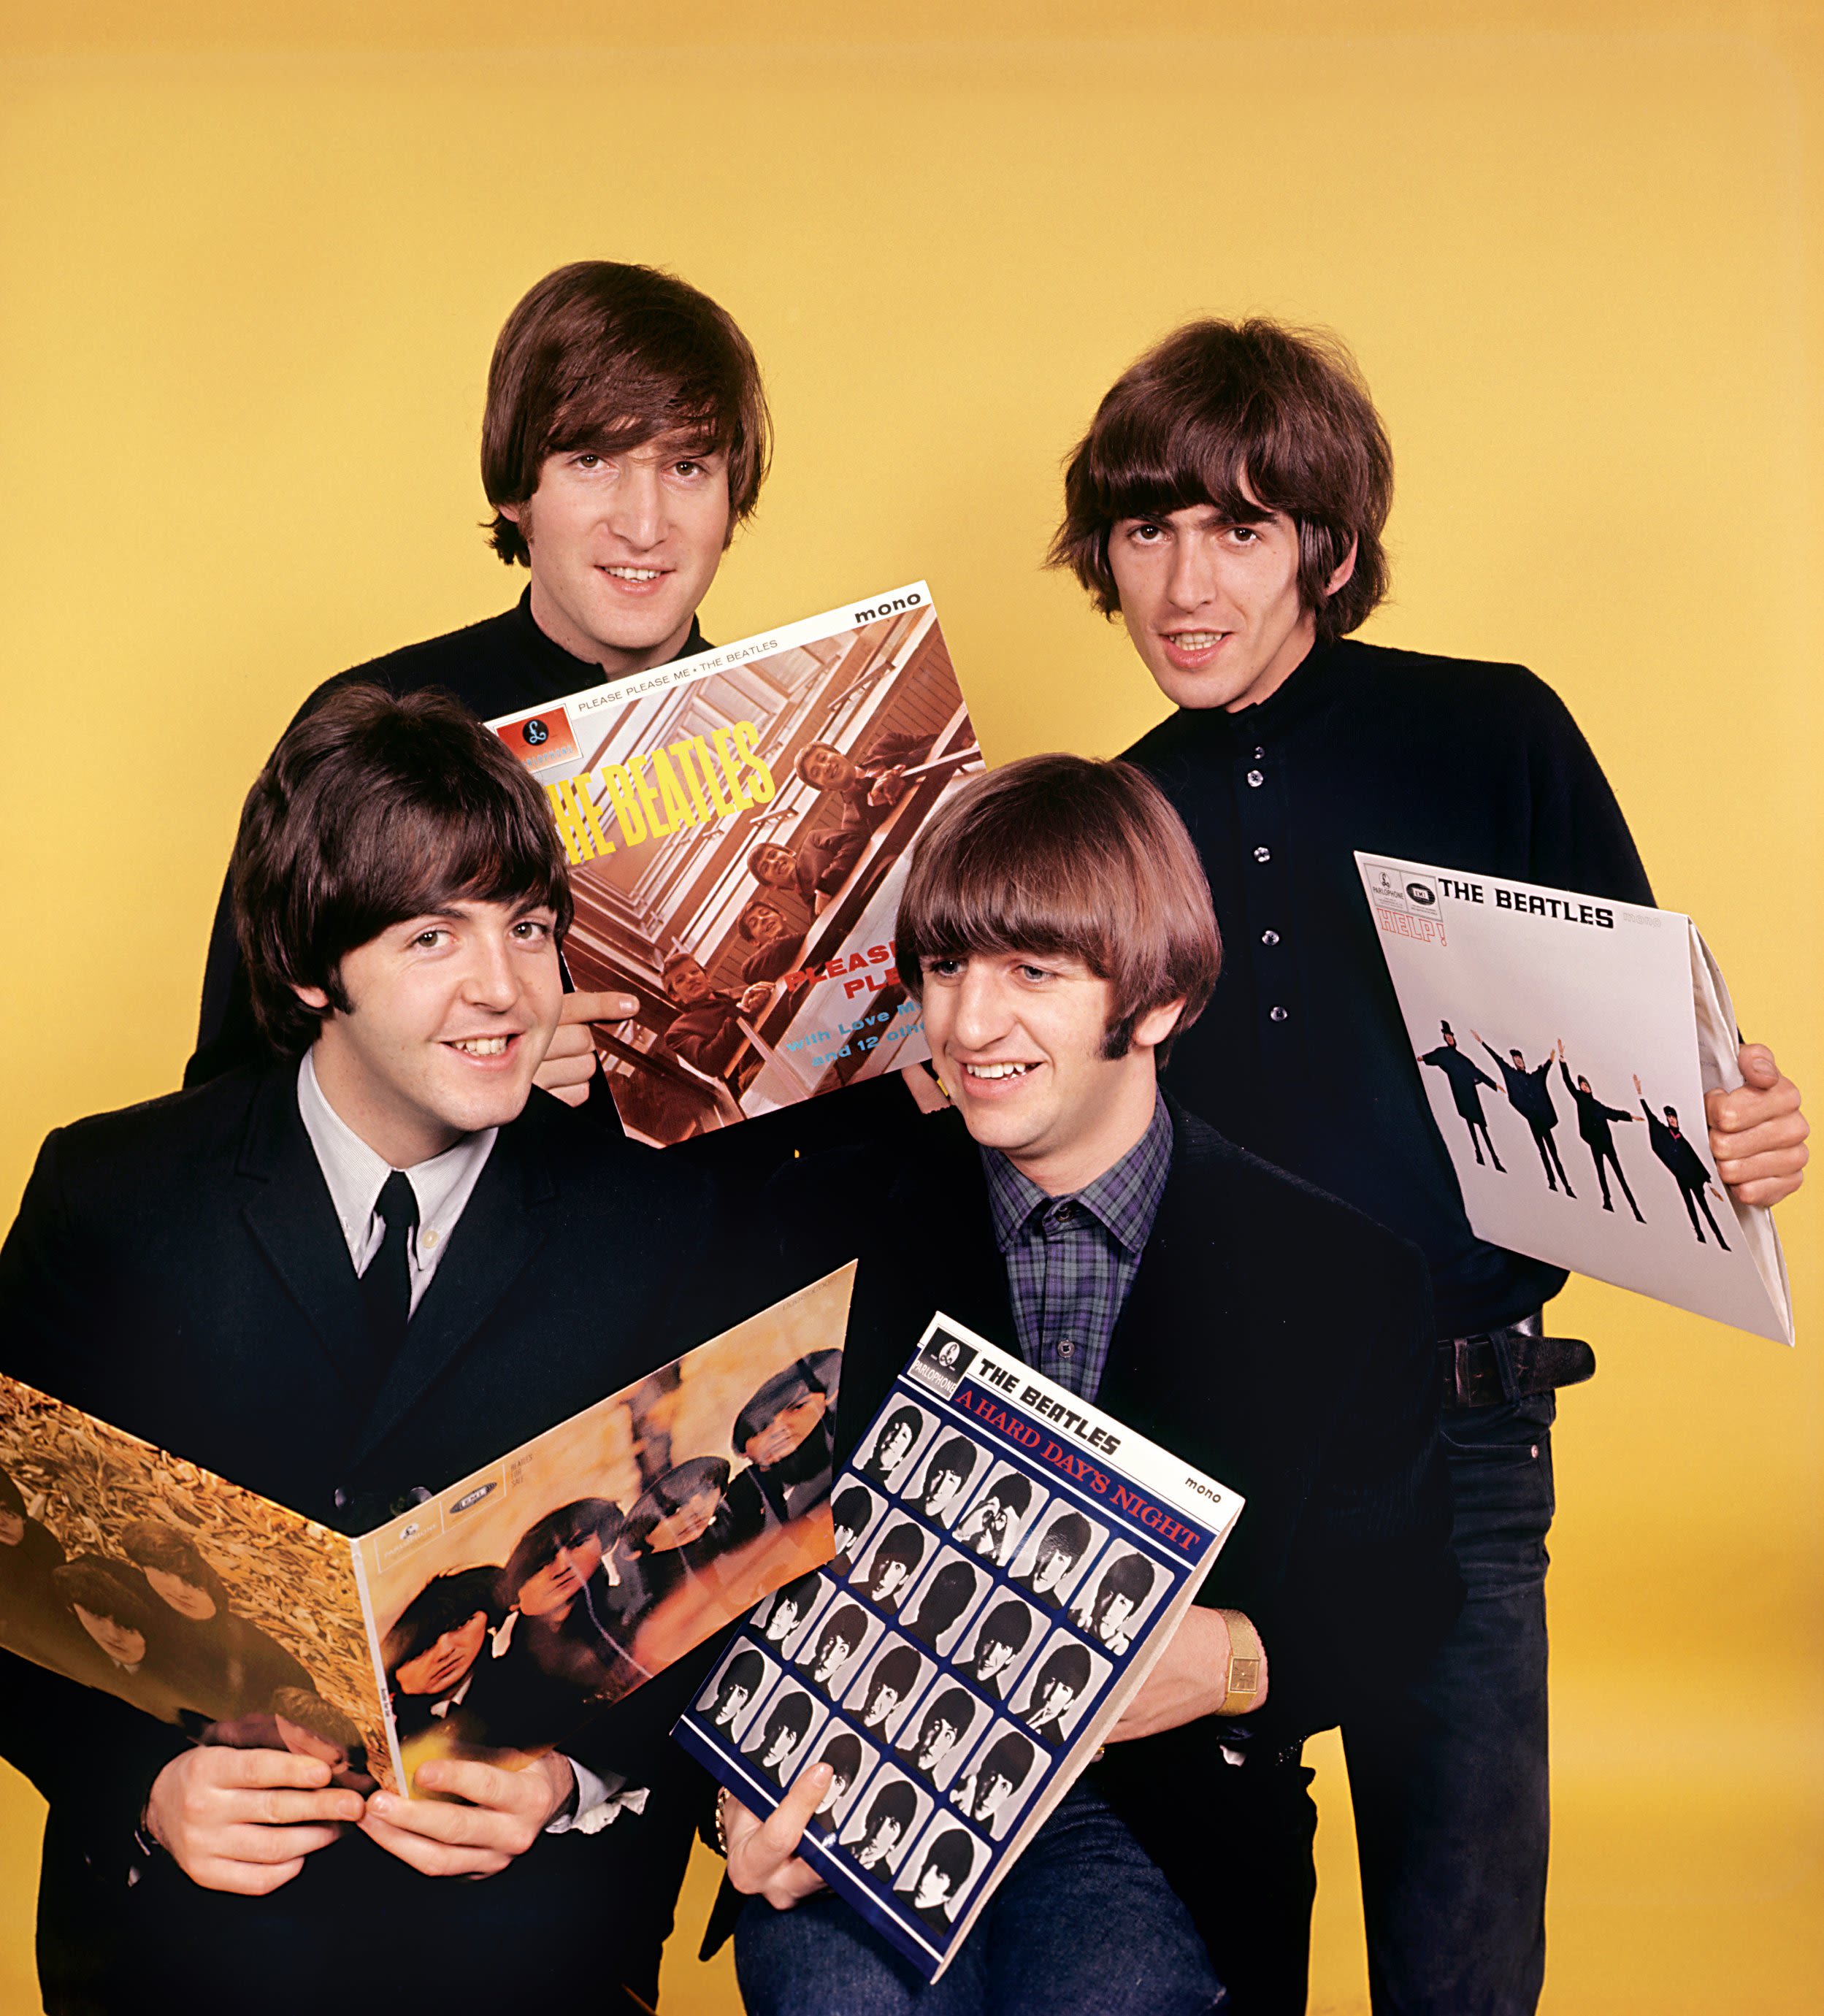 Beatles bootlegs released on iTunes